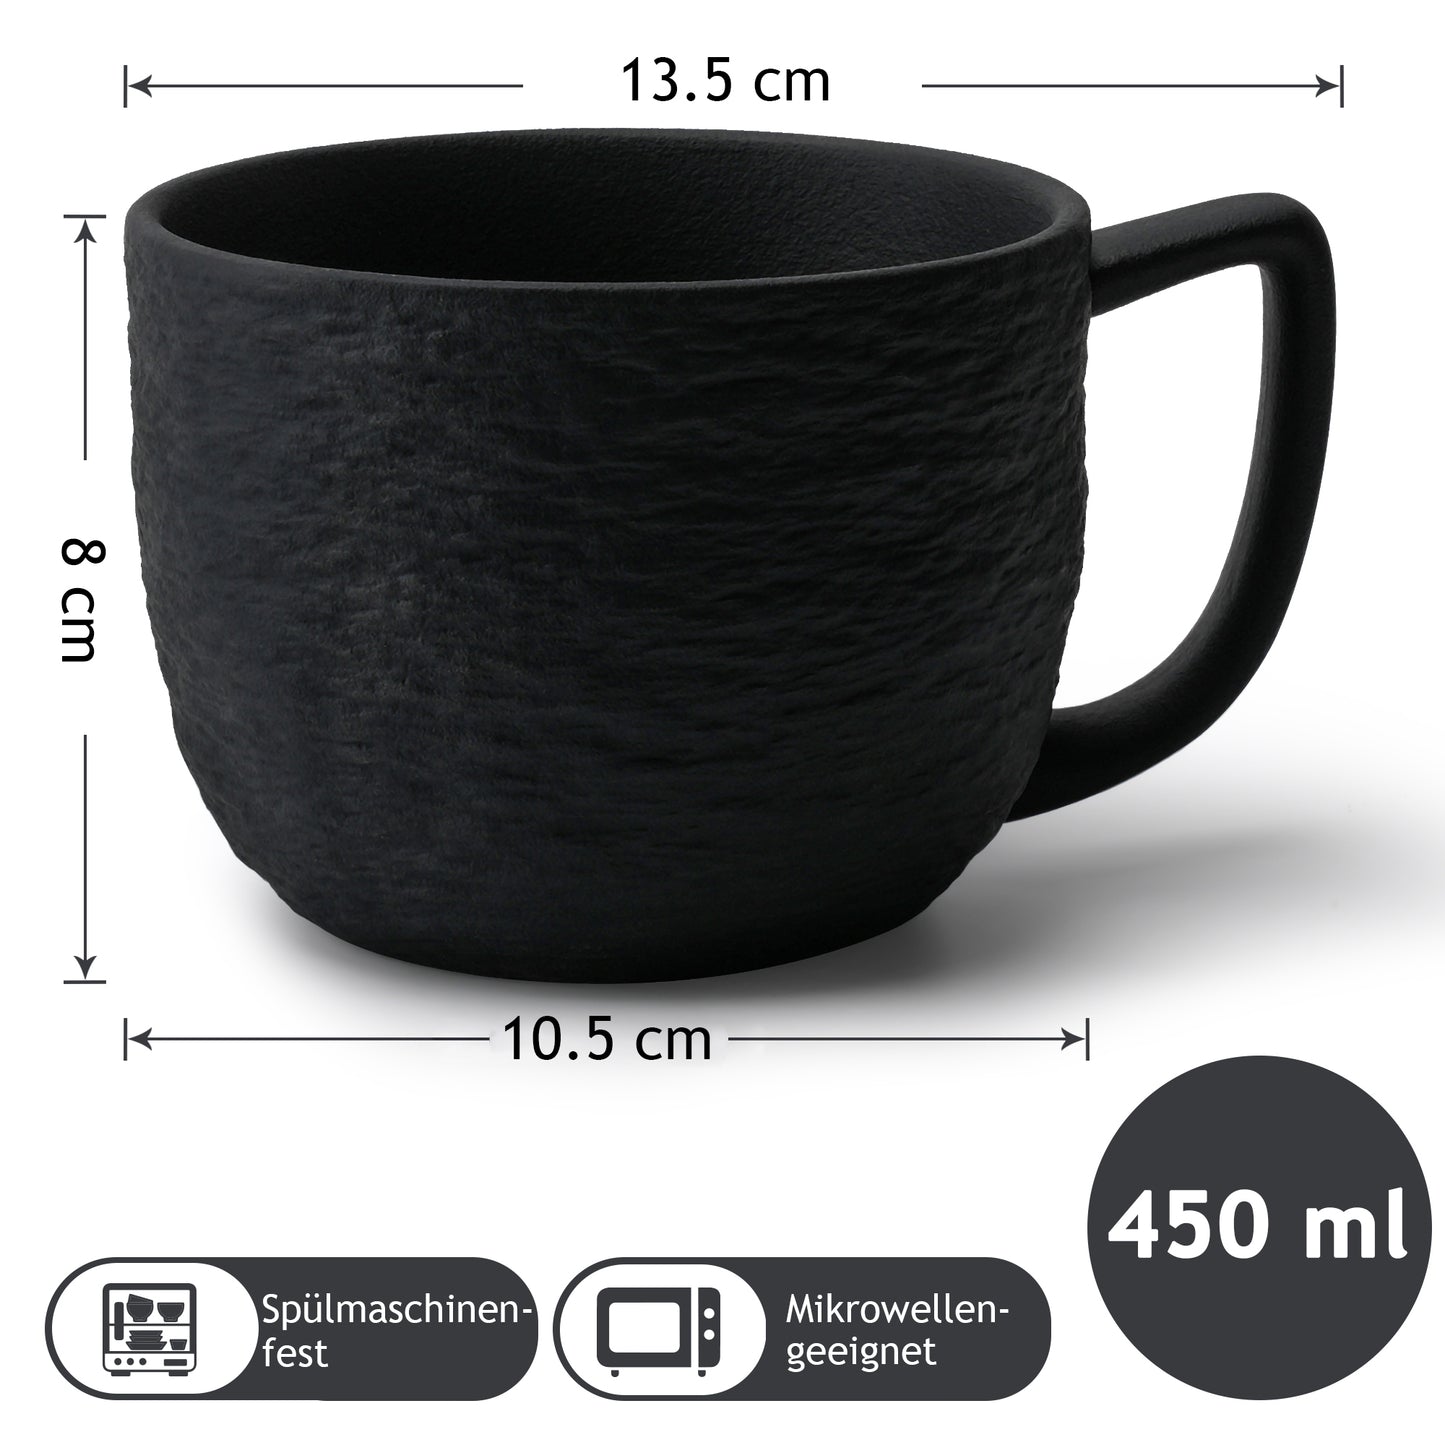 Kaffeetassen Set Oasis Kollektion (4 x 450 ml)